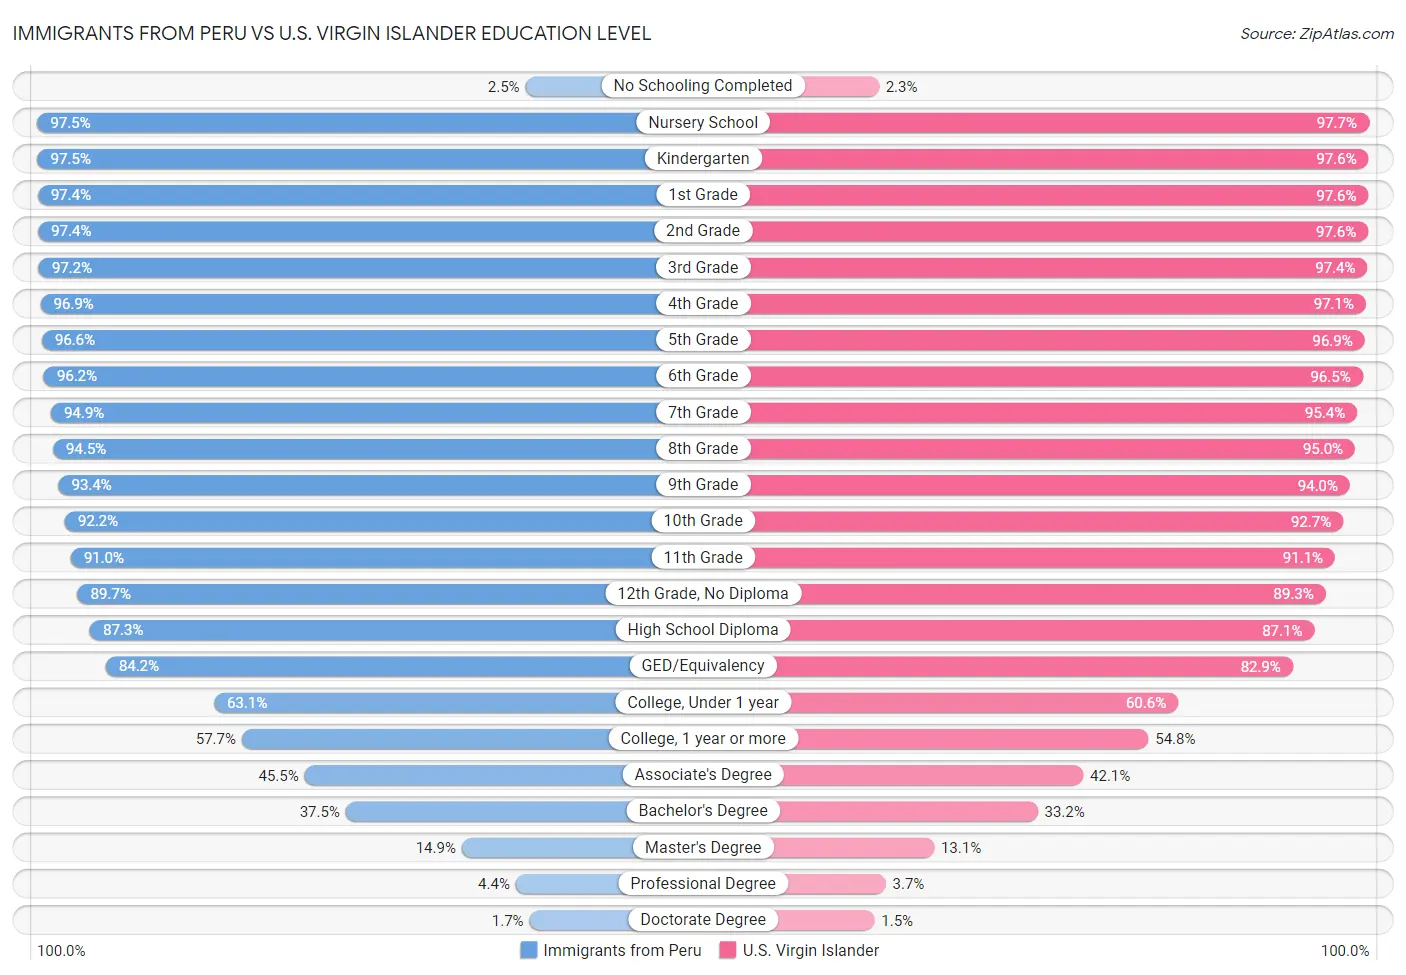 Immigrants from Peru vs U.S. Virgin Islander Education Level